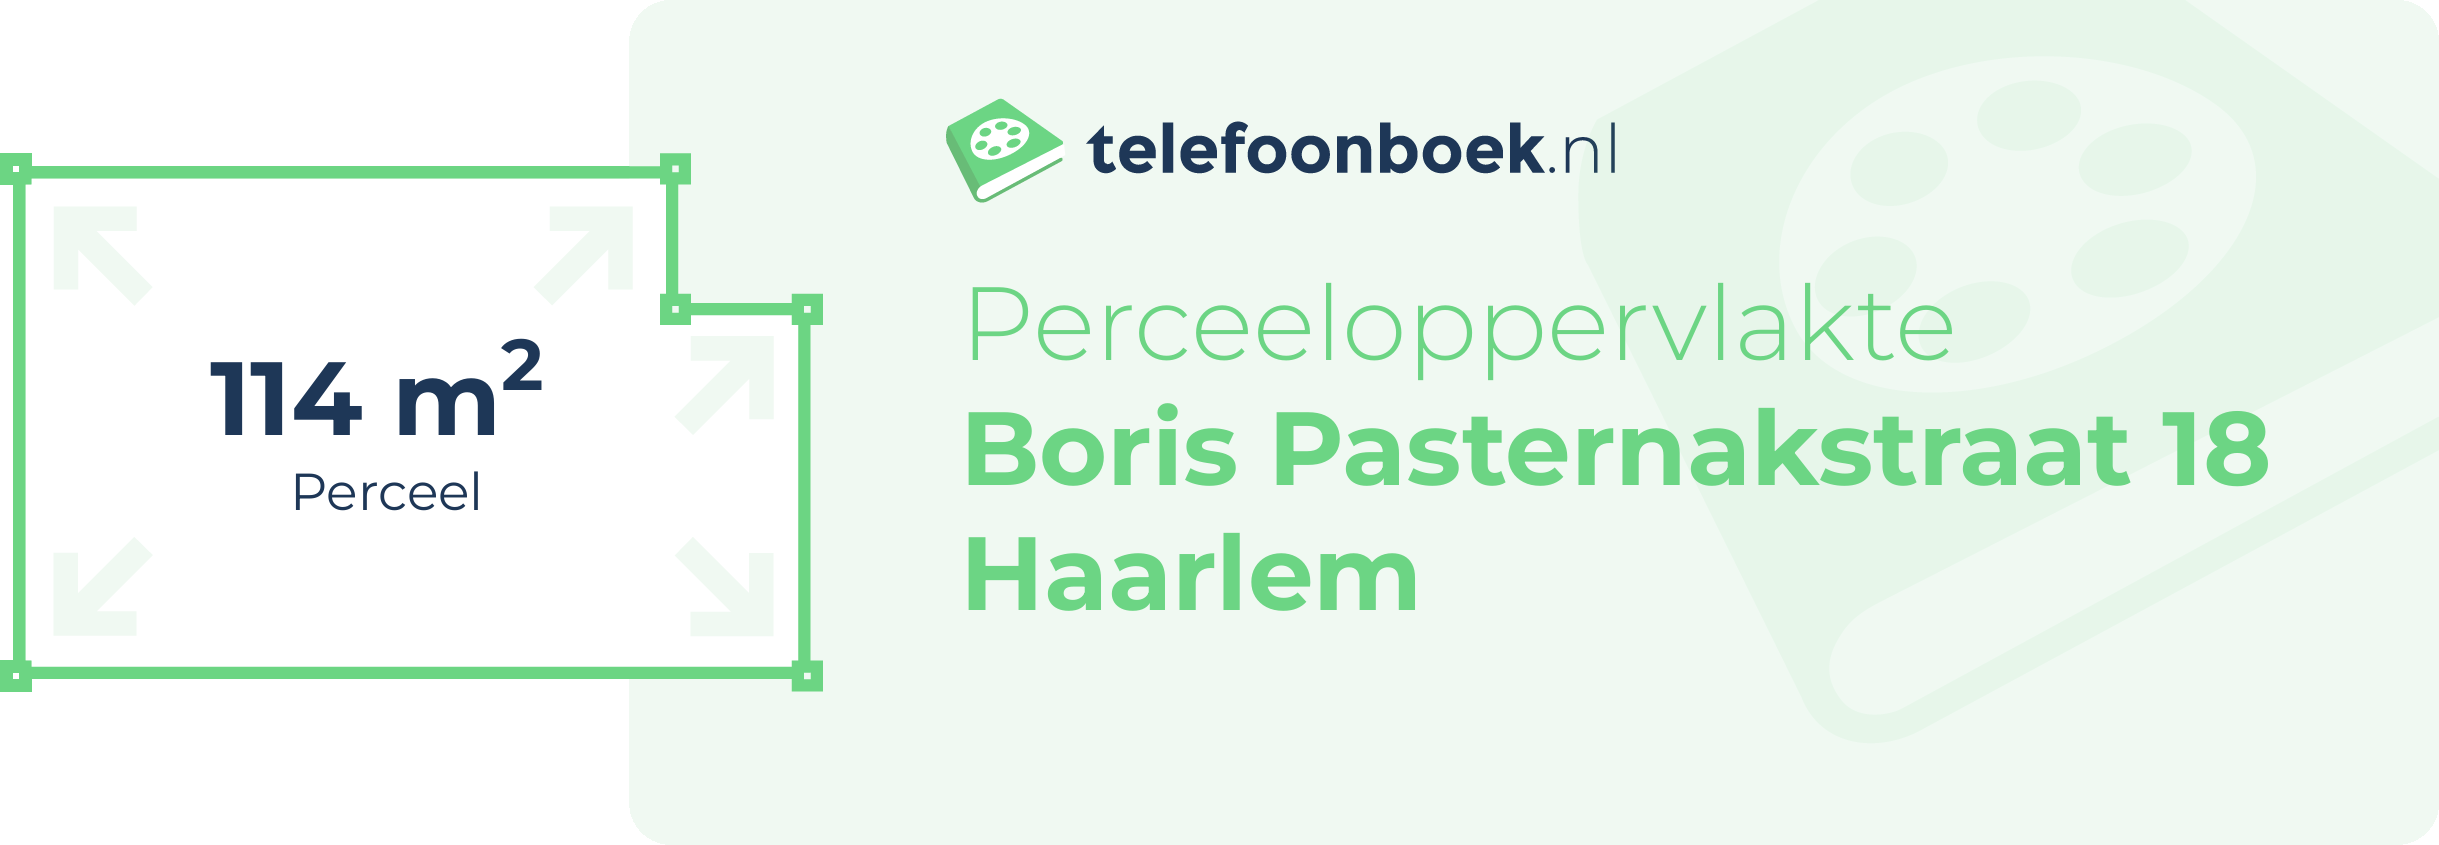 Perceeloppervlakte Boris Pasternakstraat 18 Haarlem